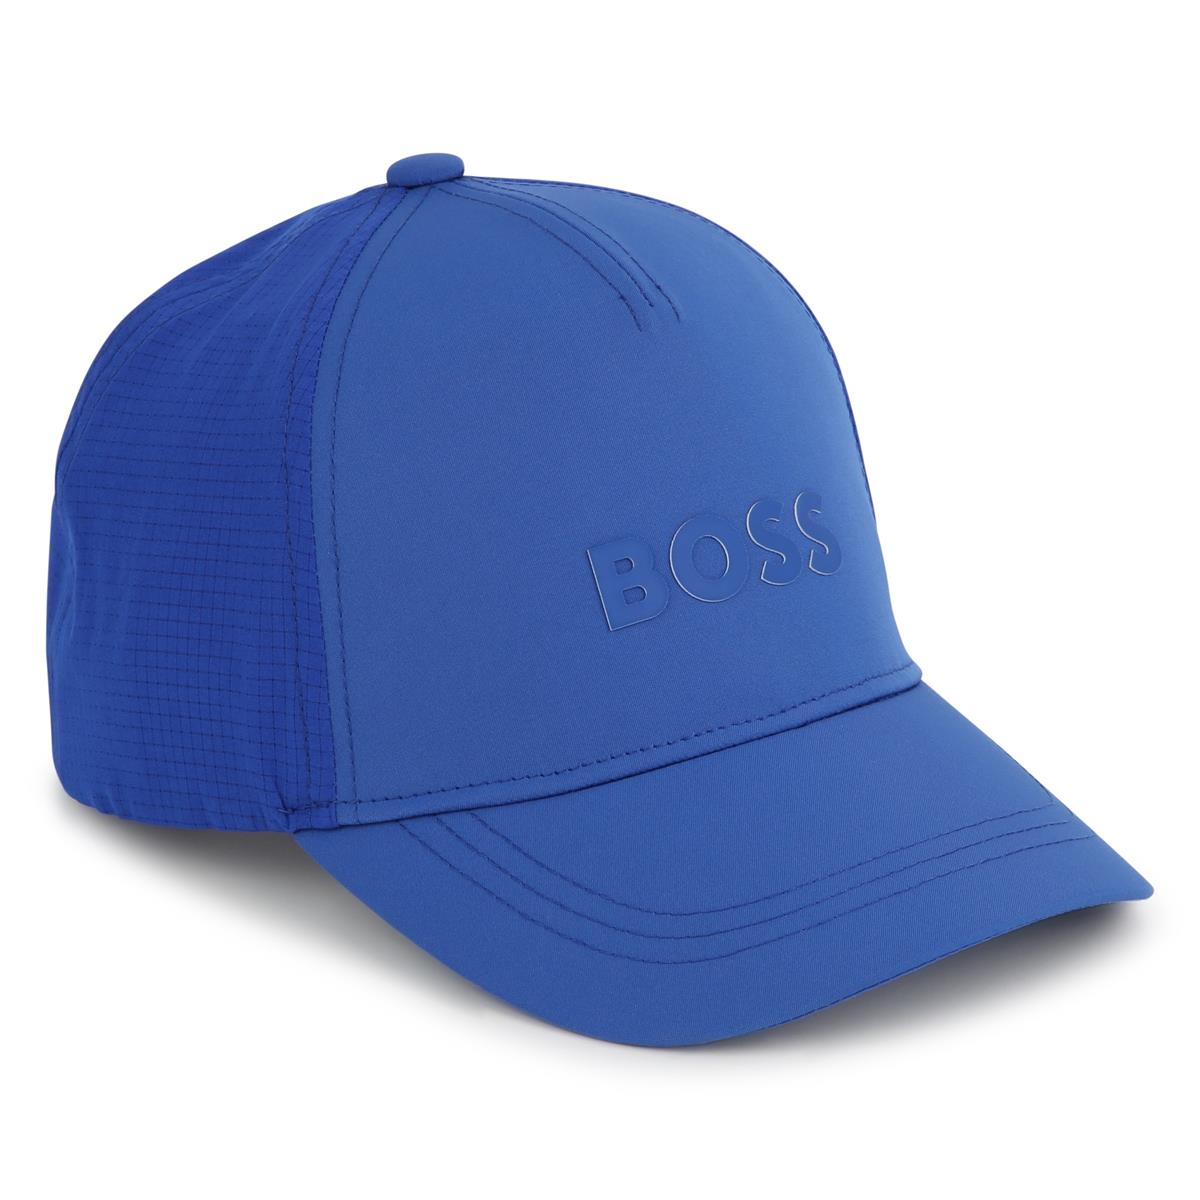 Boys Blue Cap